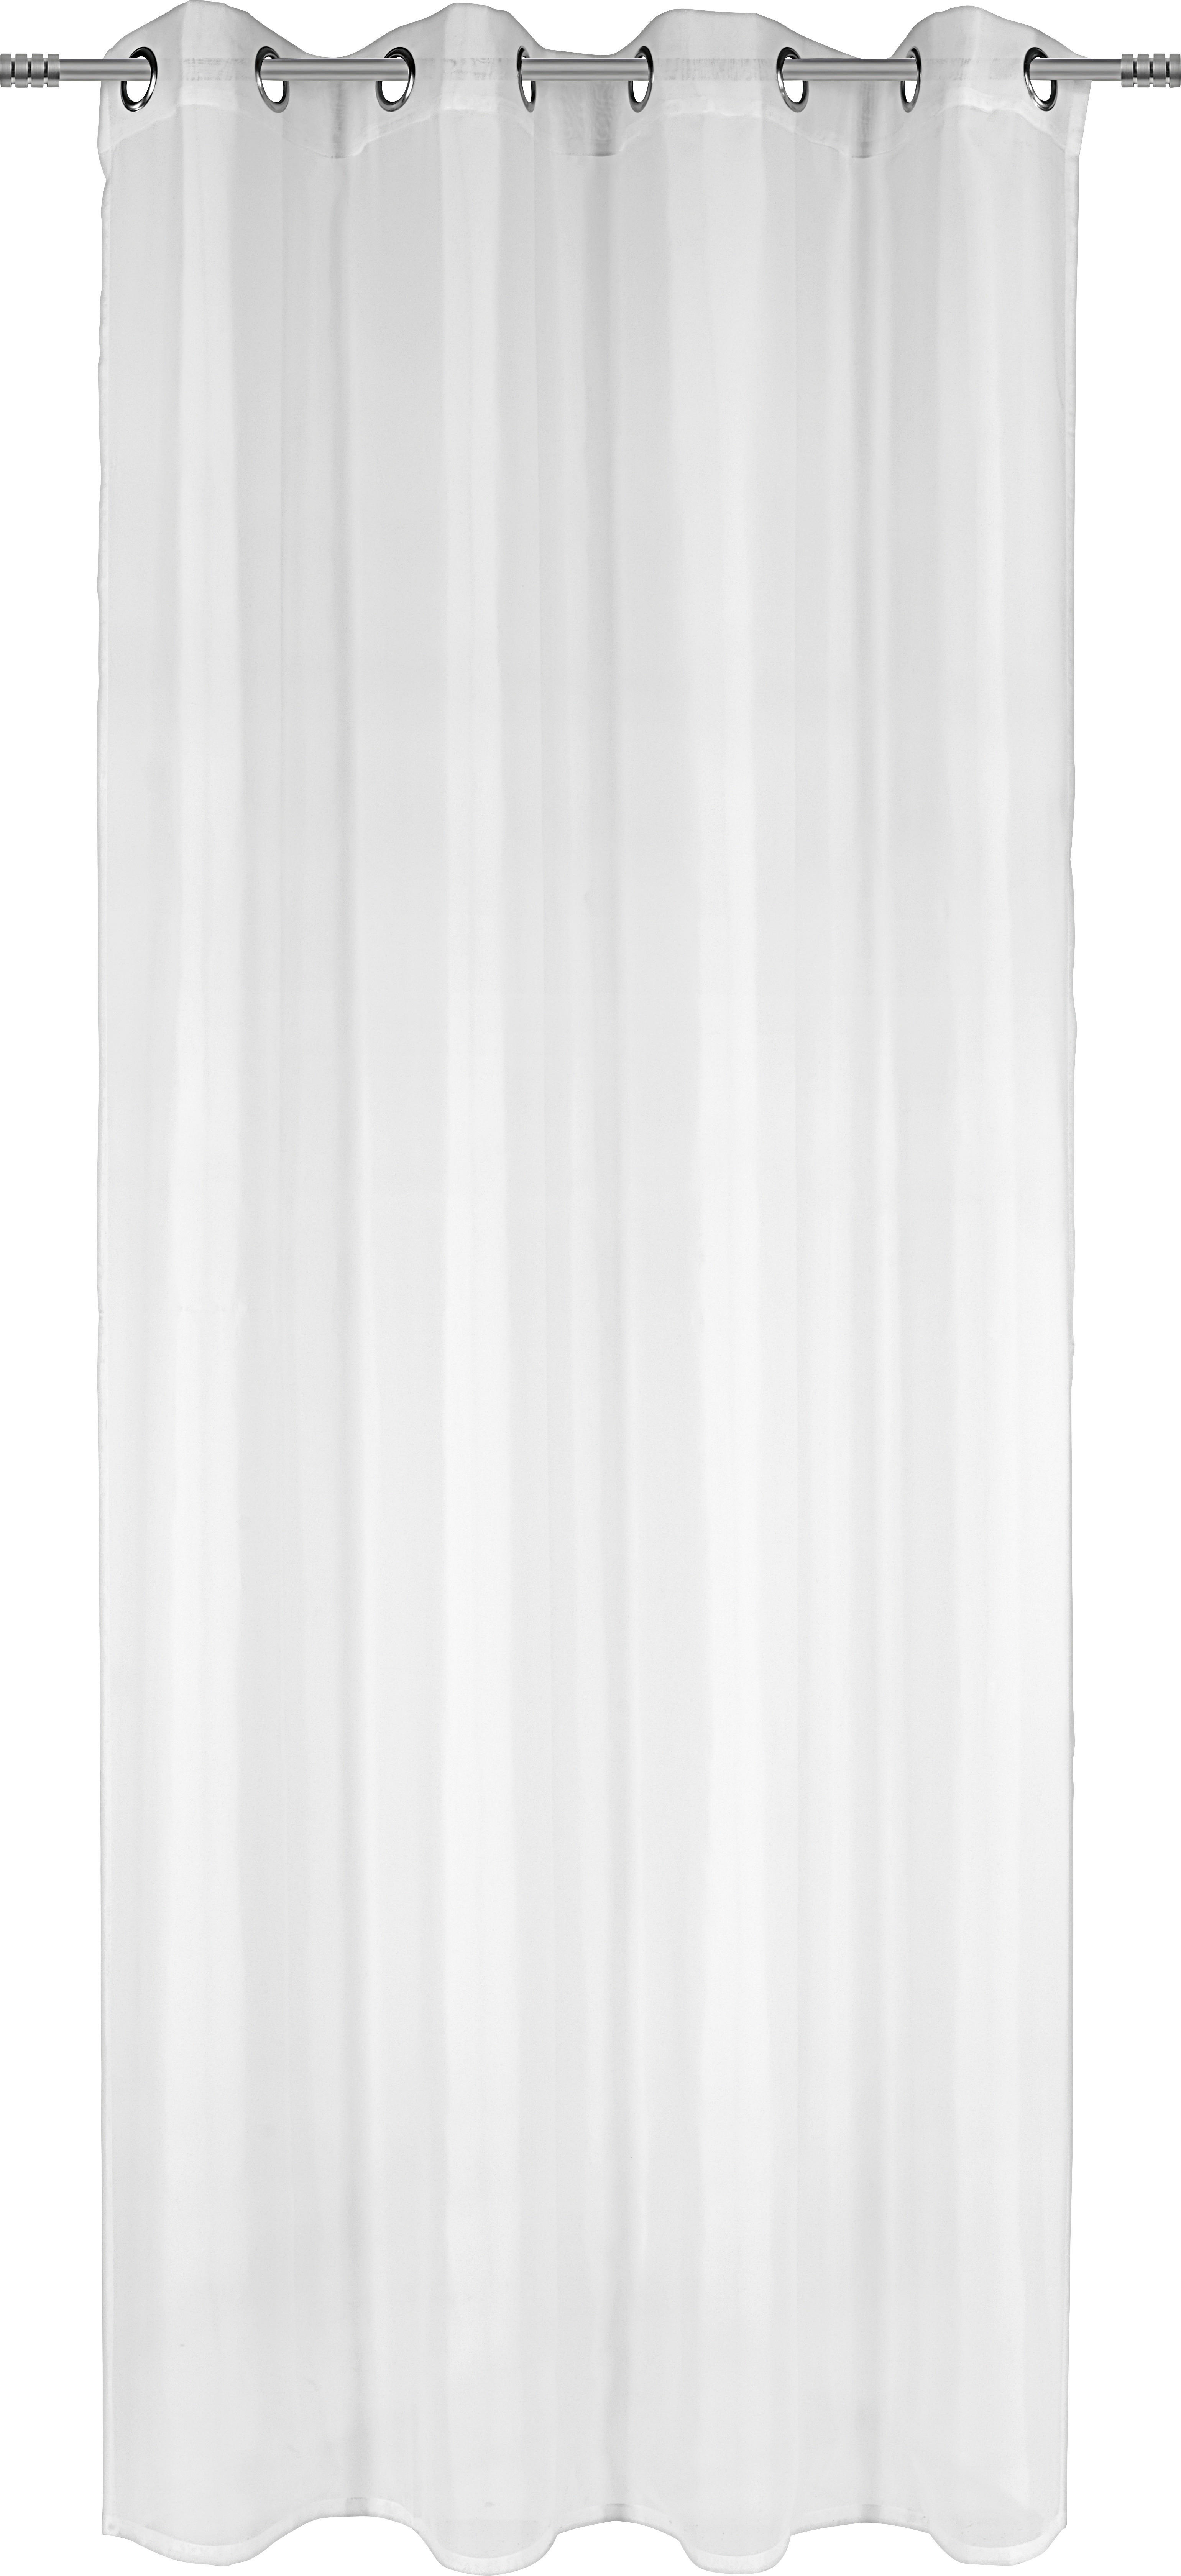 PERDEA CU INELE TIP CAPSĂ transparent  - alb, Basics, textil (140/245cm) - Boxxx